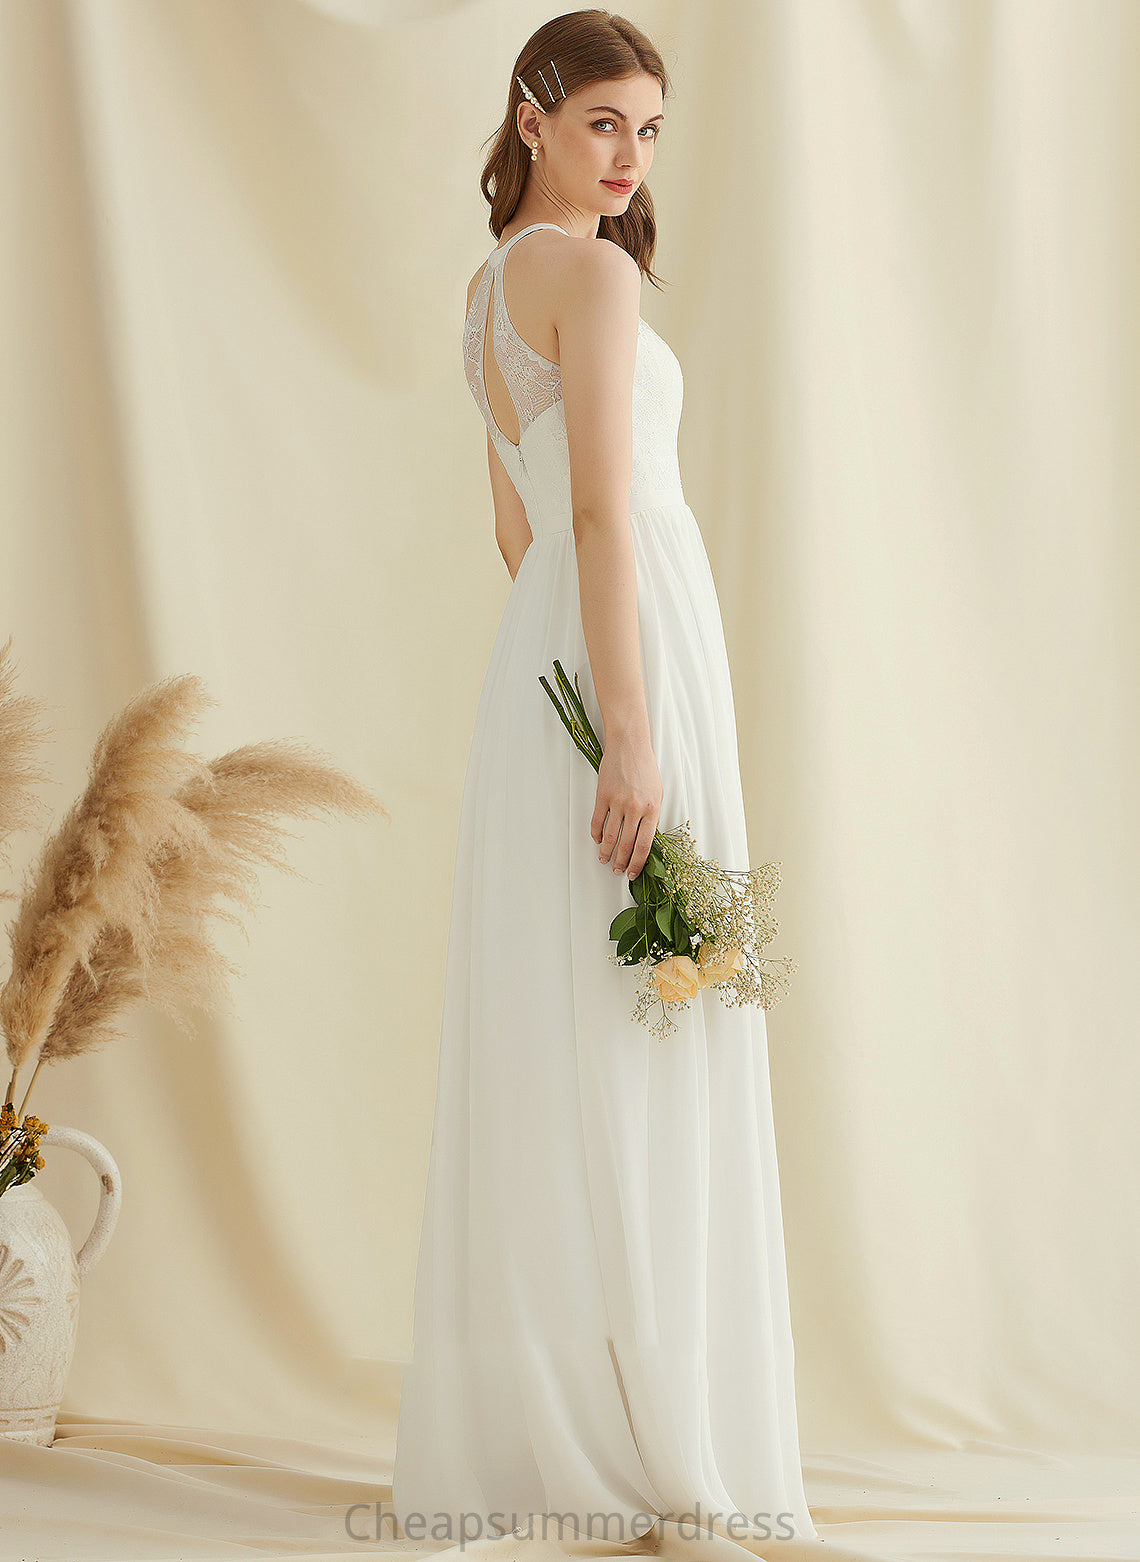 Wedding Wedding Dresses Split Chiffon Dress Scoop Neck Front Lace A-Line With Floor-Length Valeria